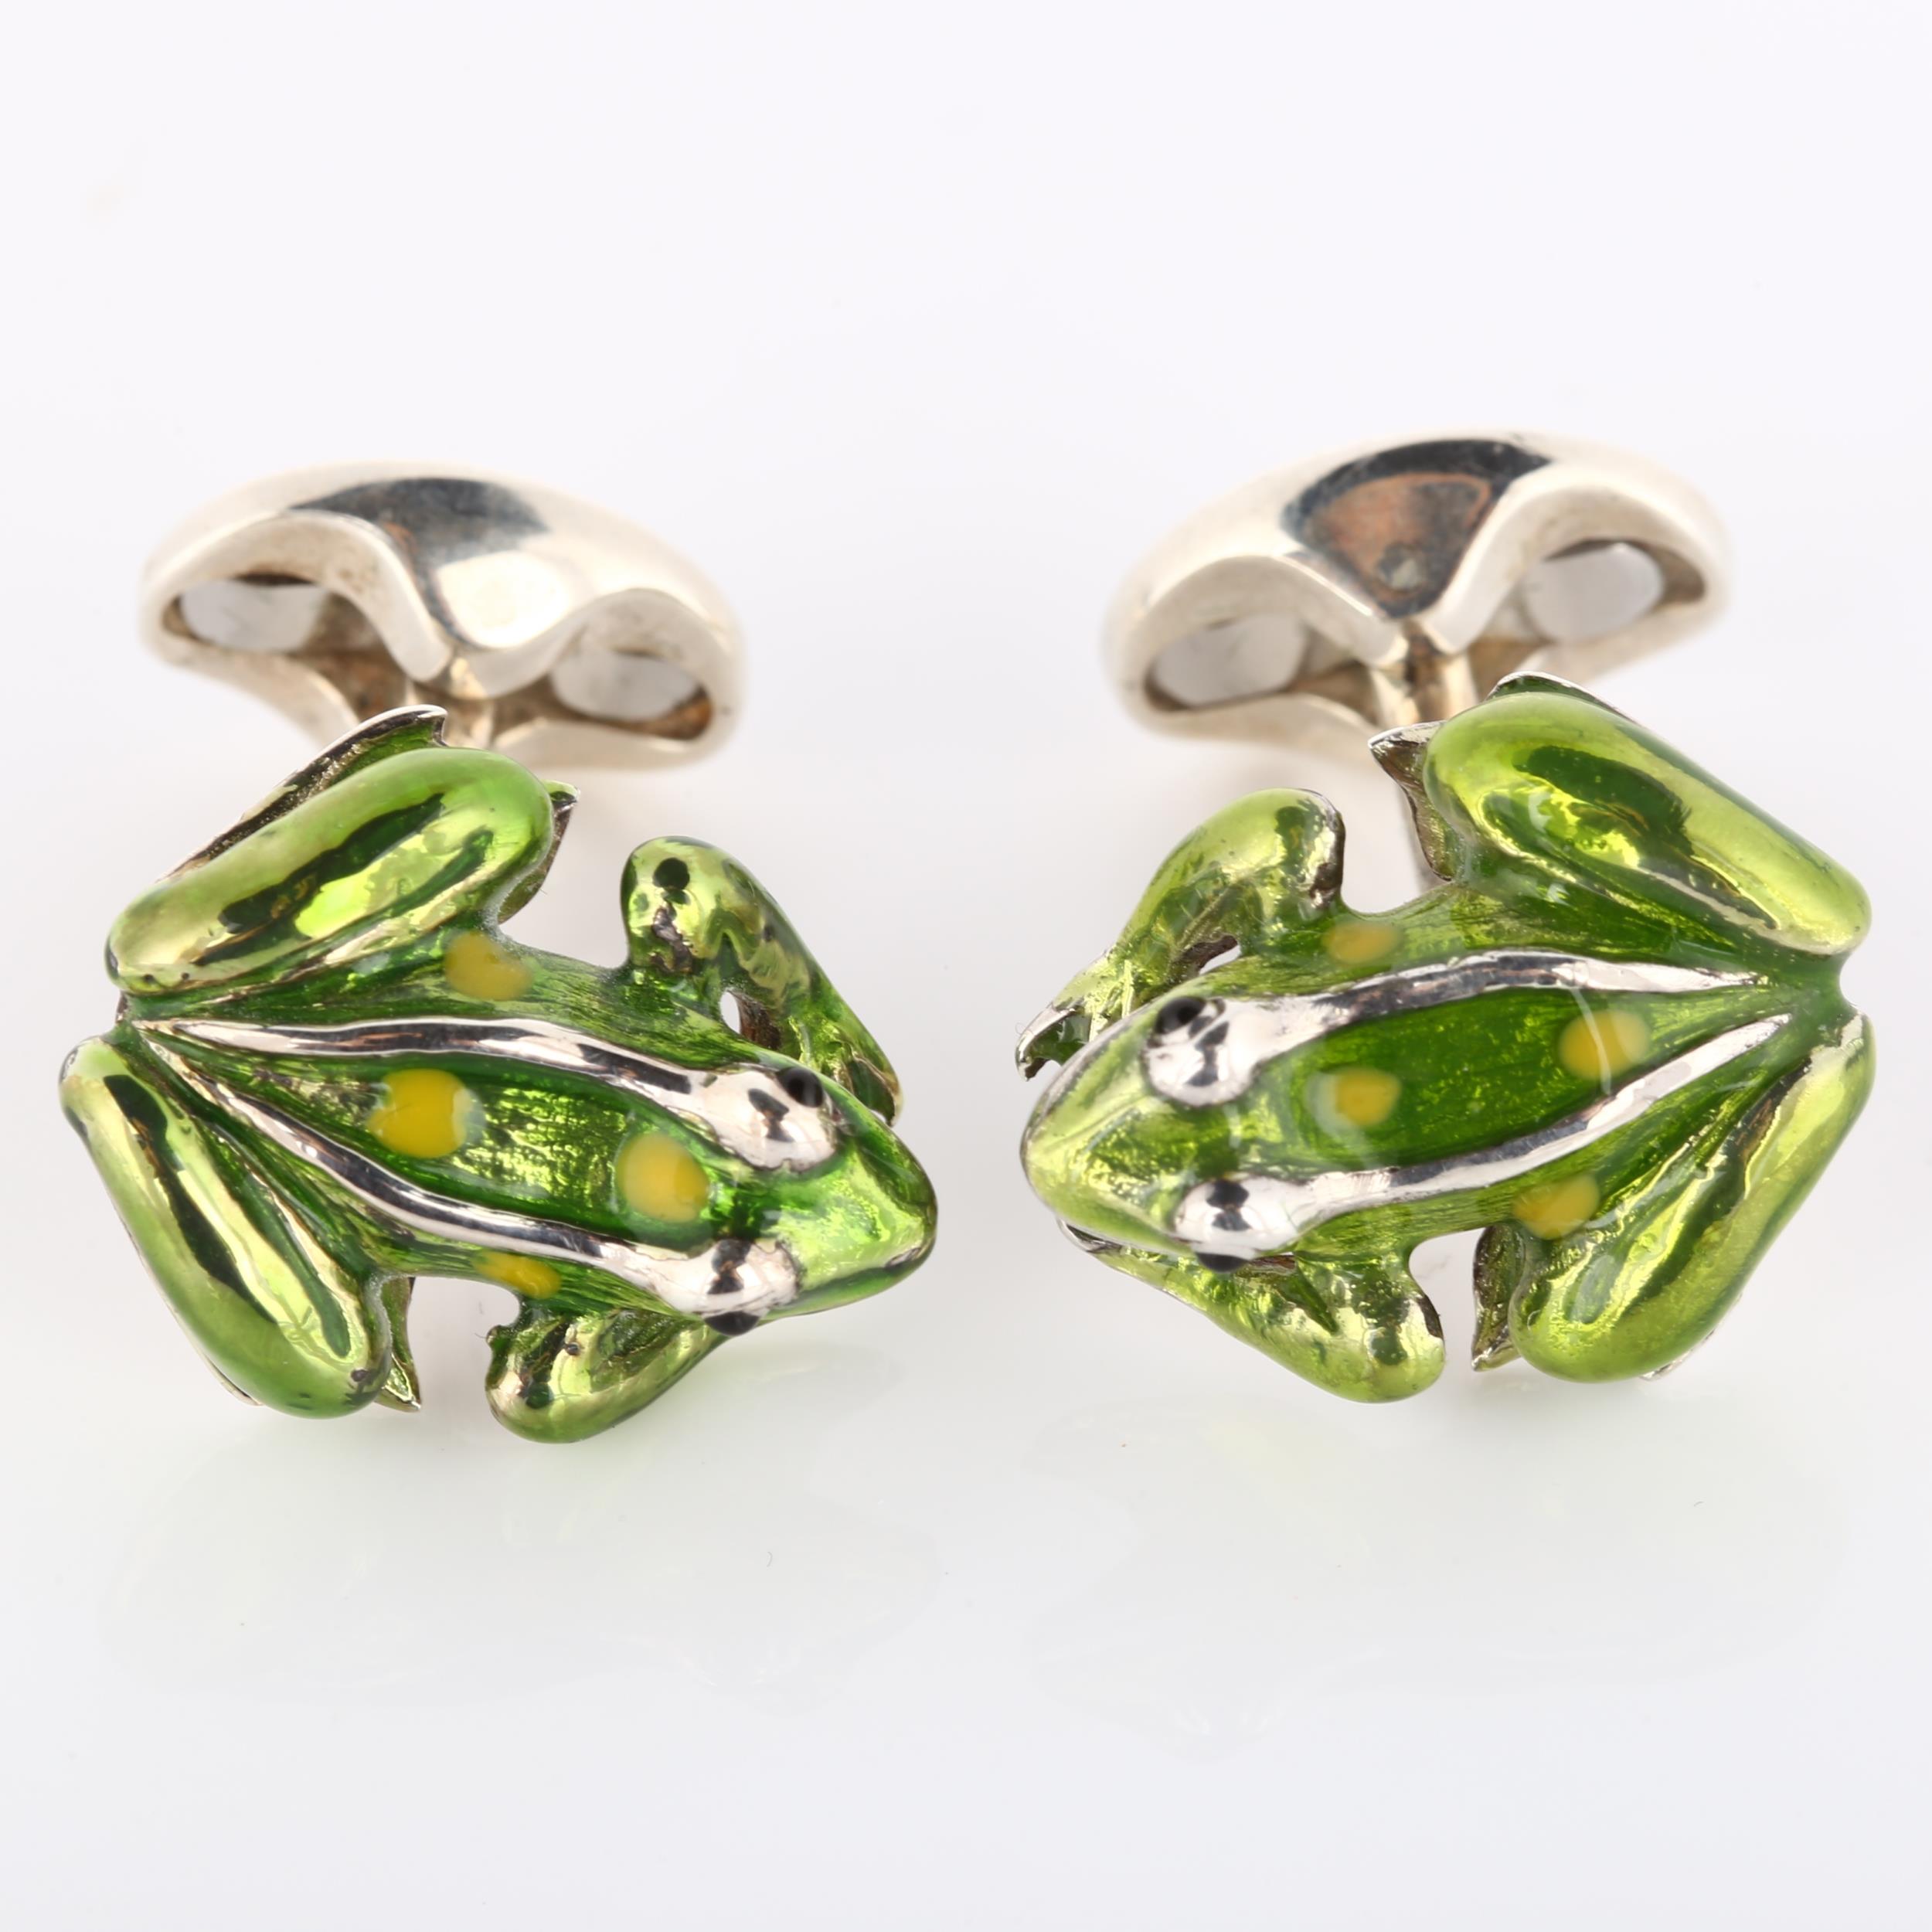 DEAKIN & FRANCIS - a pair of sterling silver and enamel figural frog cufflinks, hallmarks Birmingham